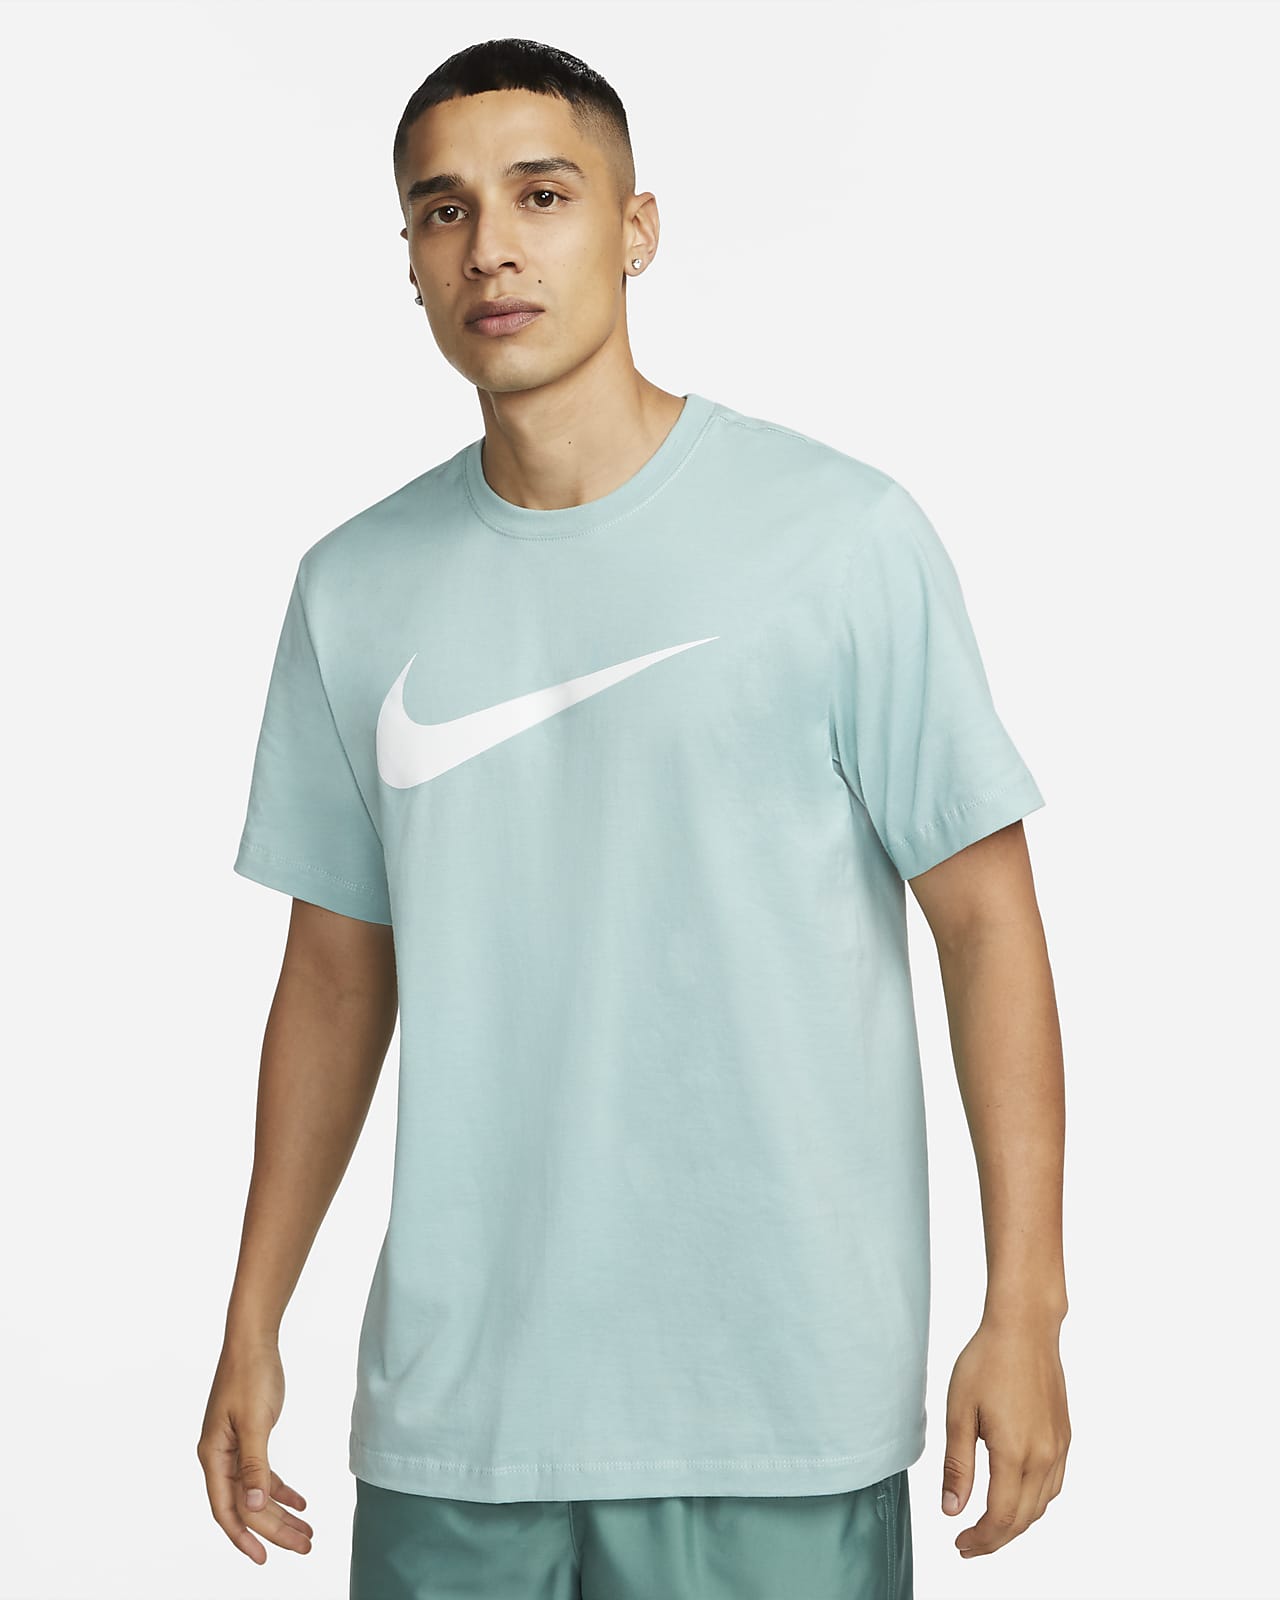 Accesorios nadar Idealmente Nike Sportswear Swoosh Men's T-Shirt. Nike.com